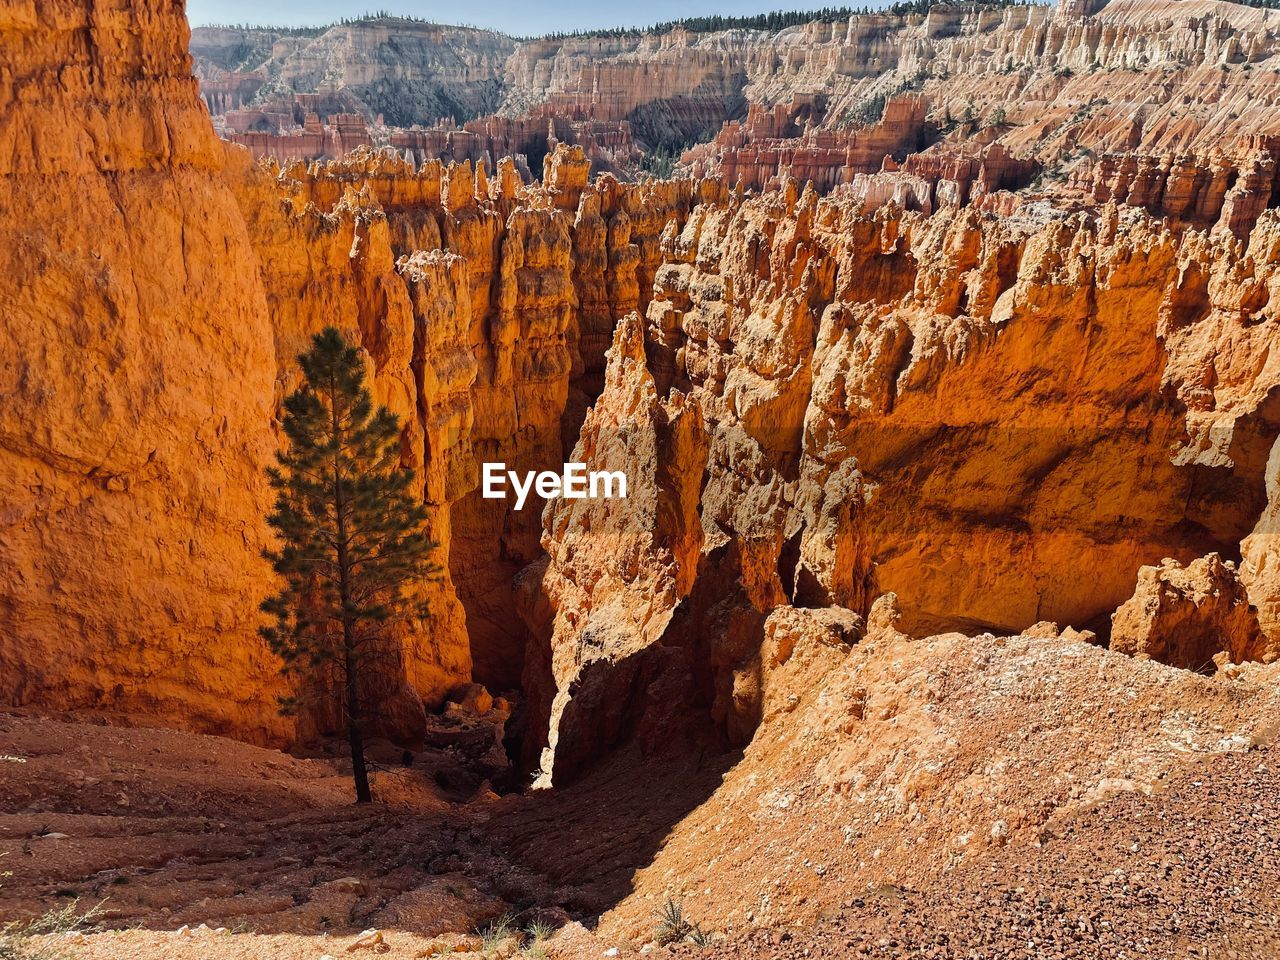 Red rocks bryce canyon